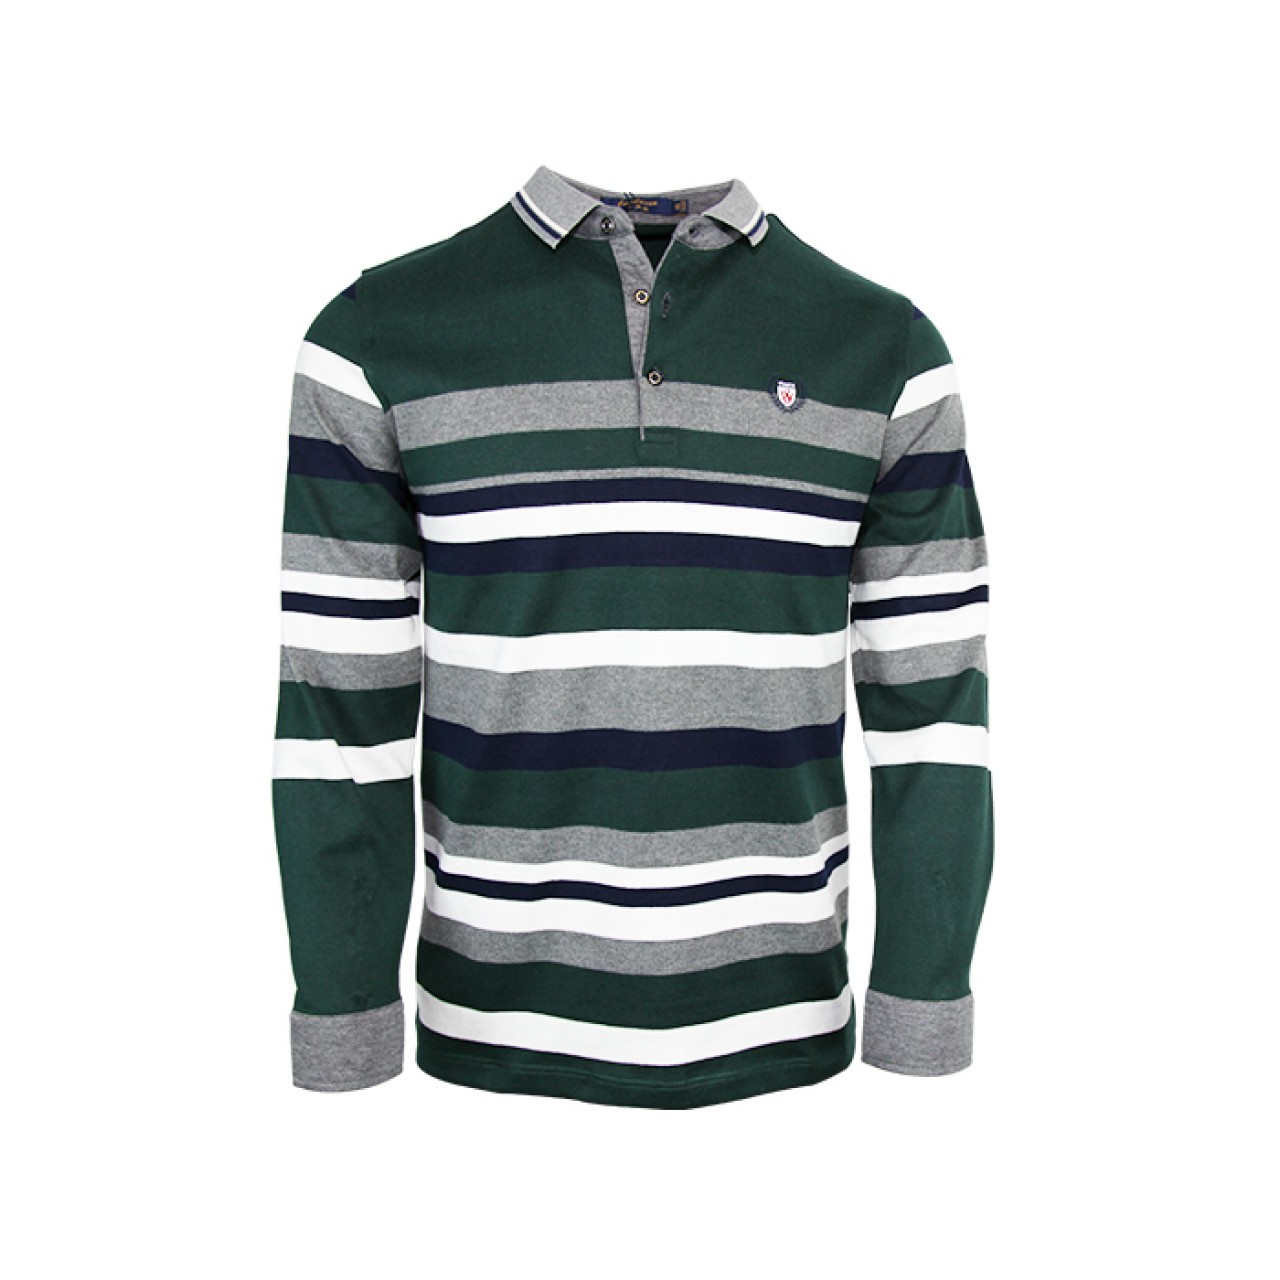 Men's Green Polo Shirt With White Striped